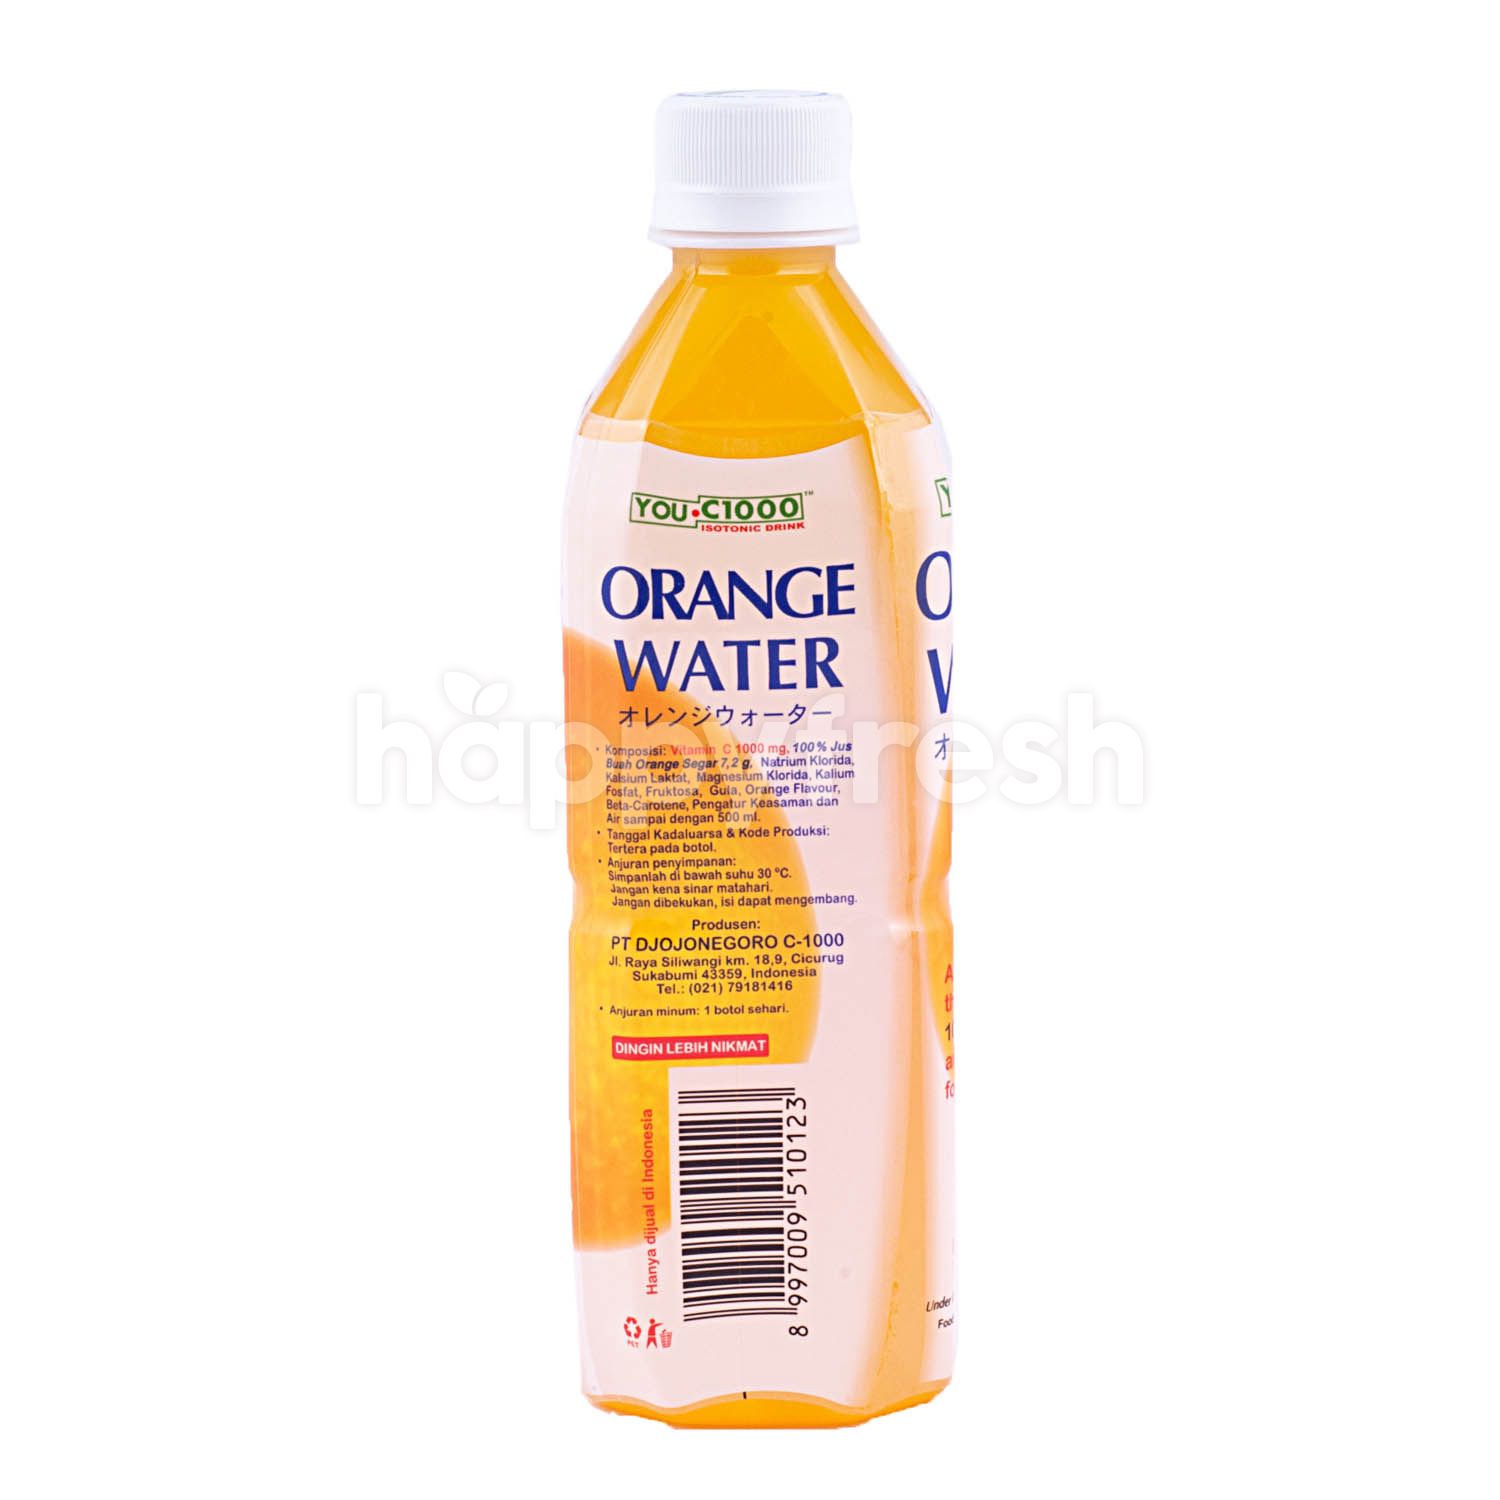 Jual You C1000 Orange Water Isotonic Drink Di Ranch Market Happyfresh